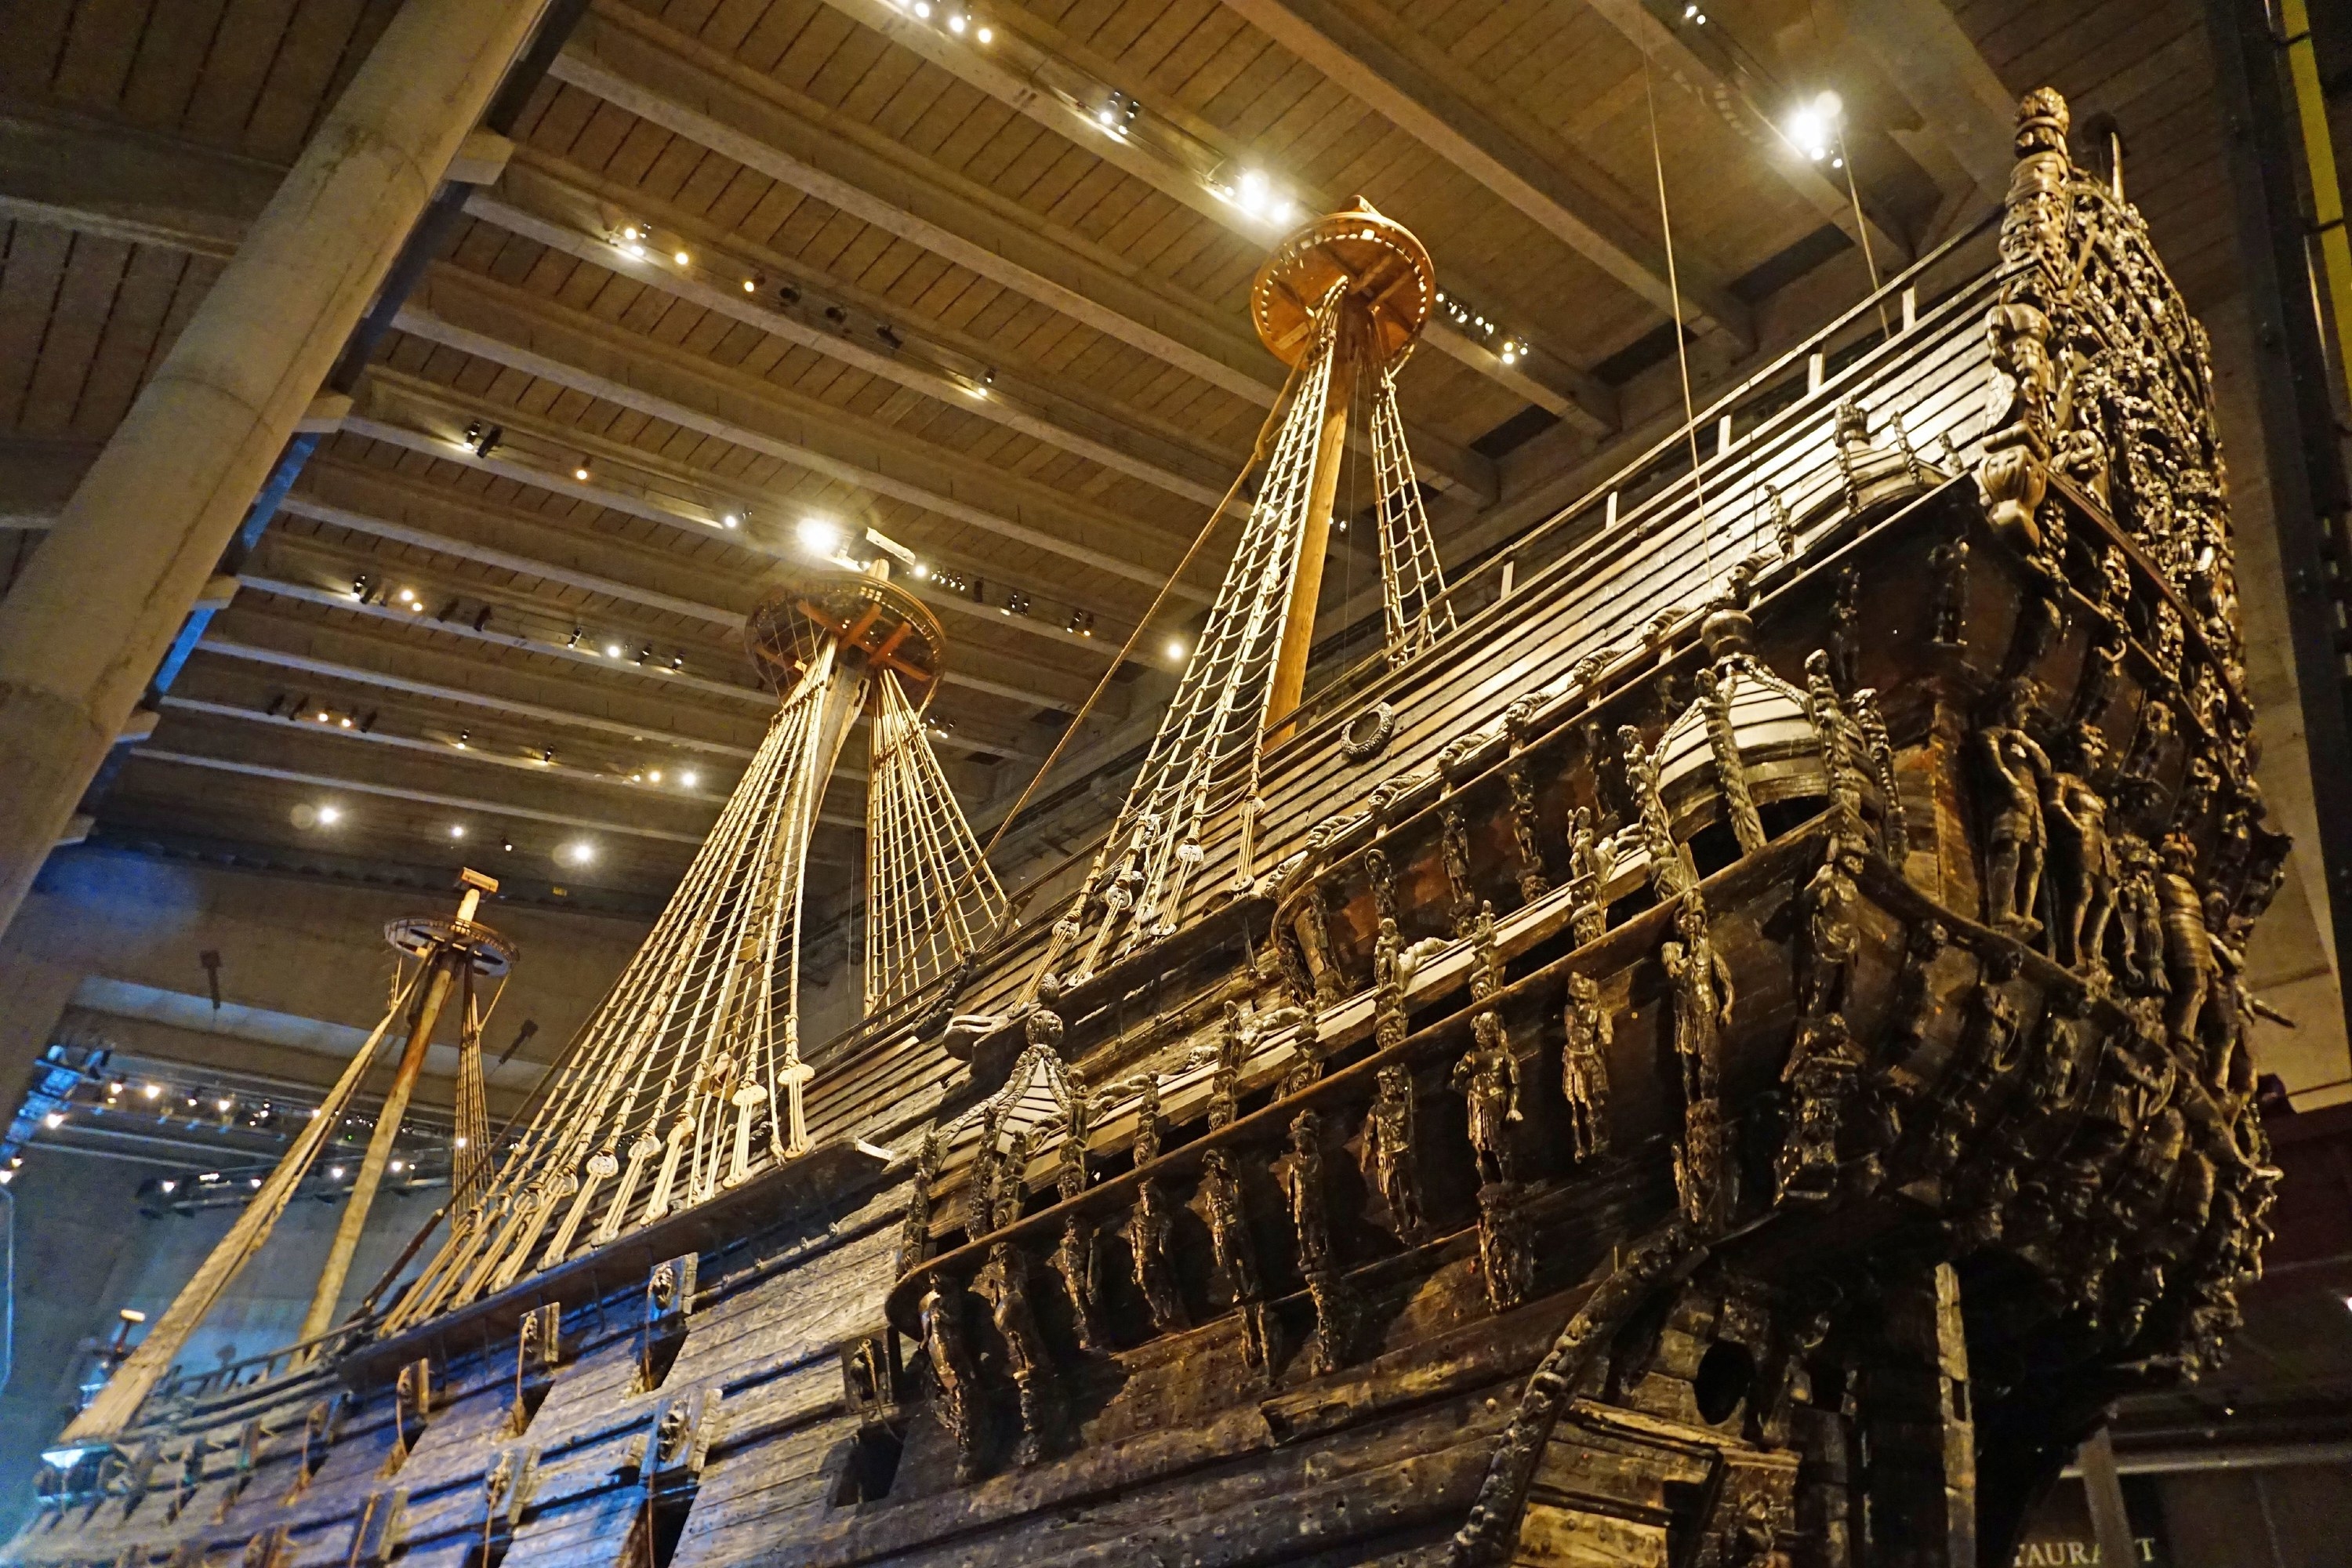 The ship inside Vasa Museum.